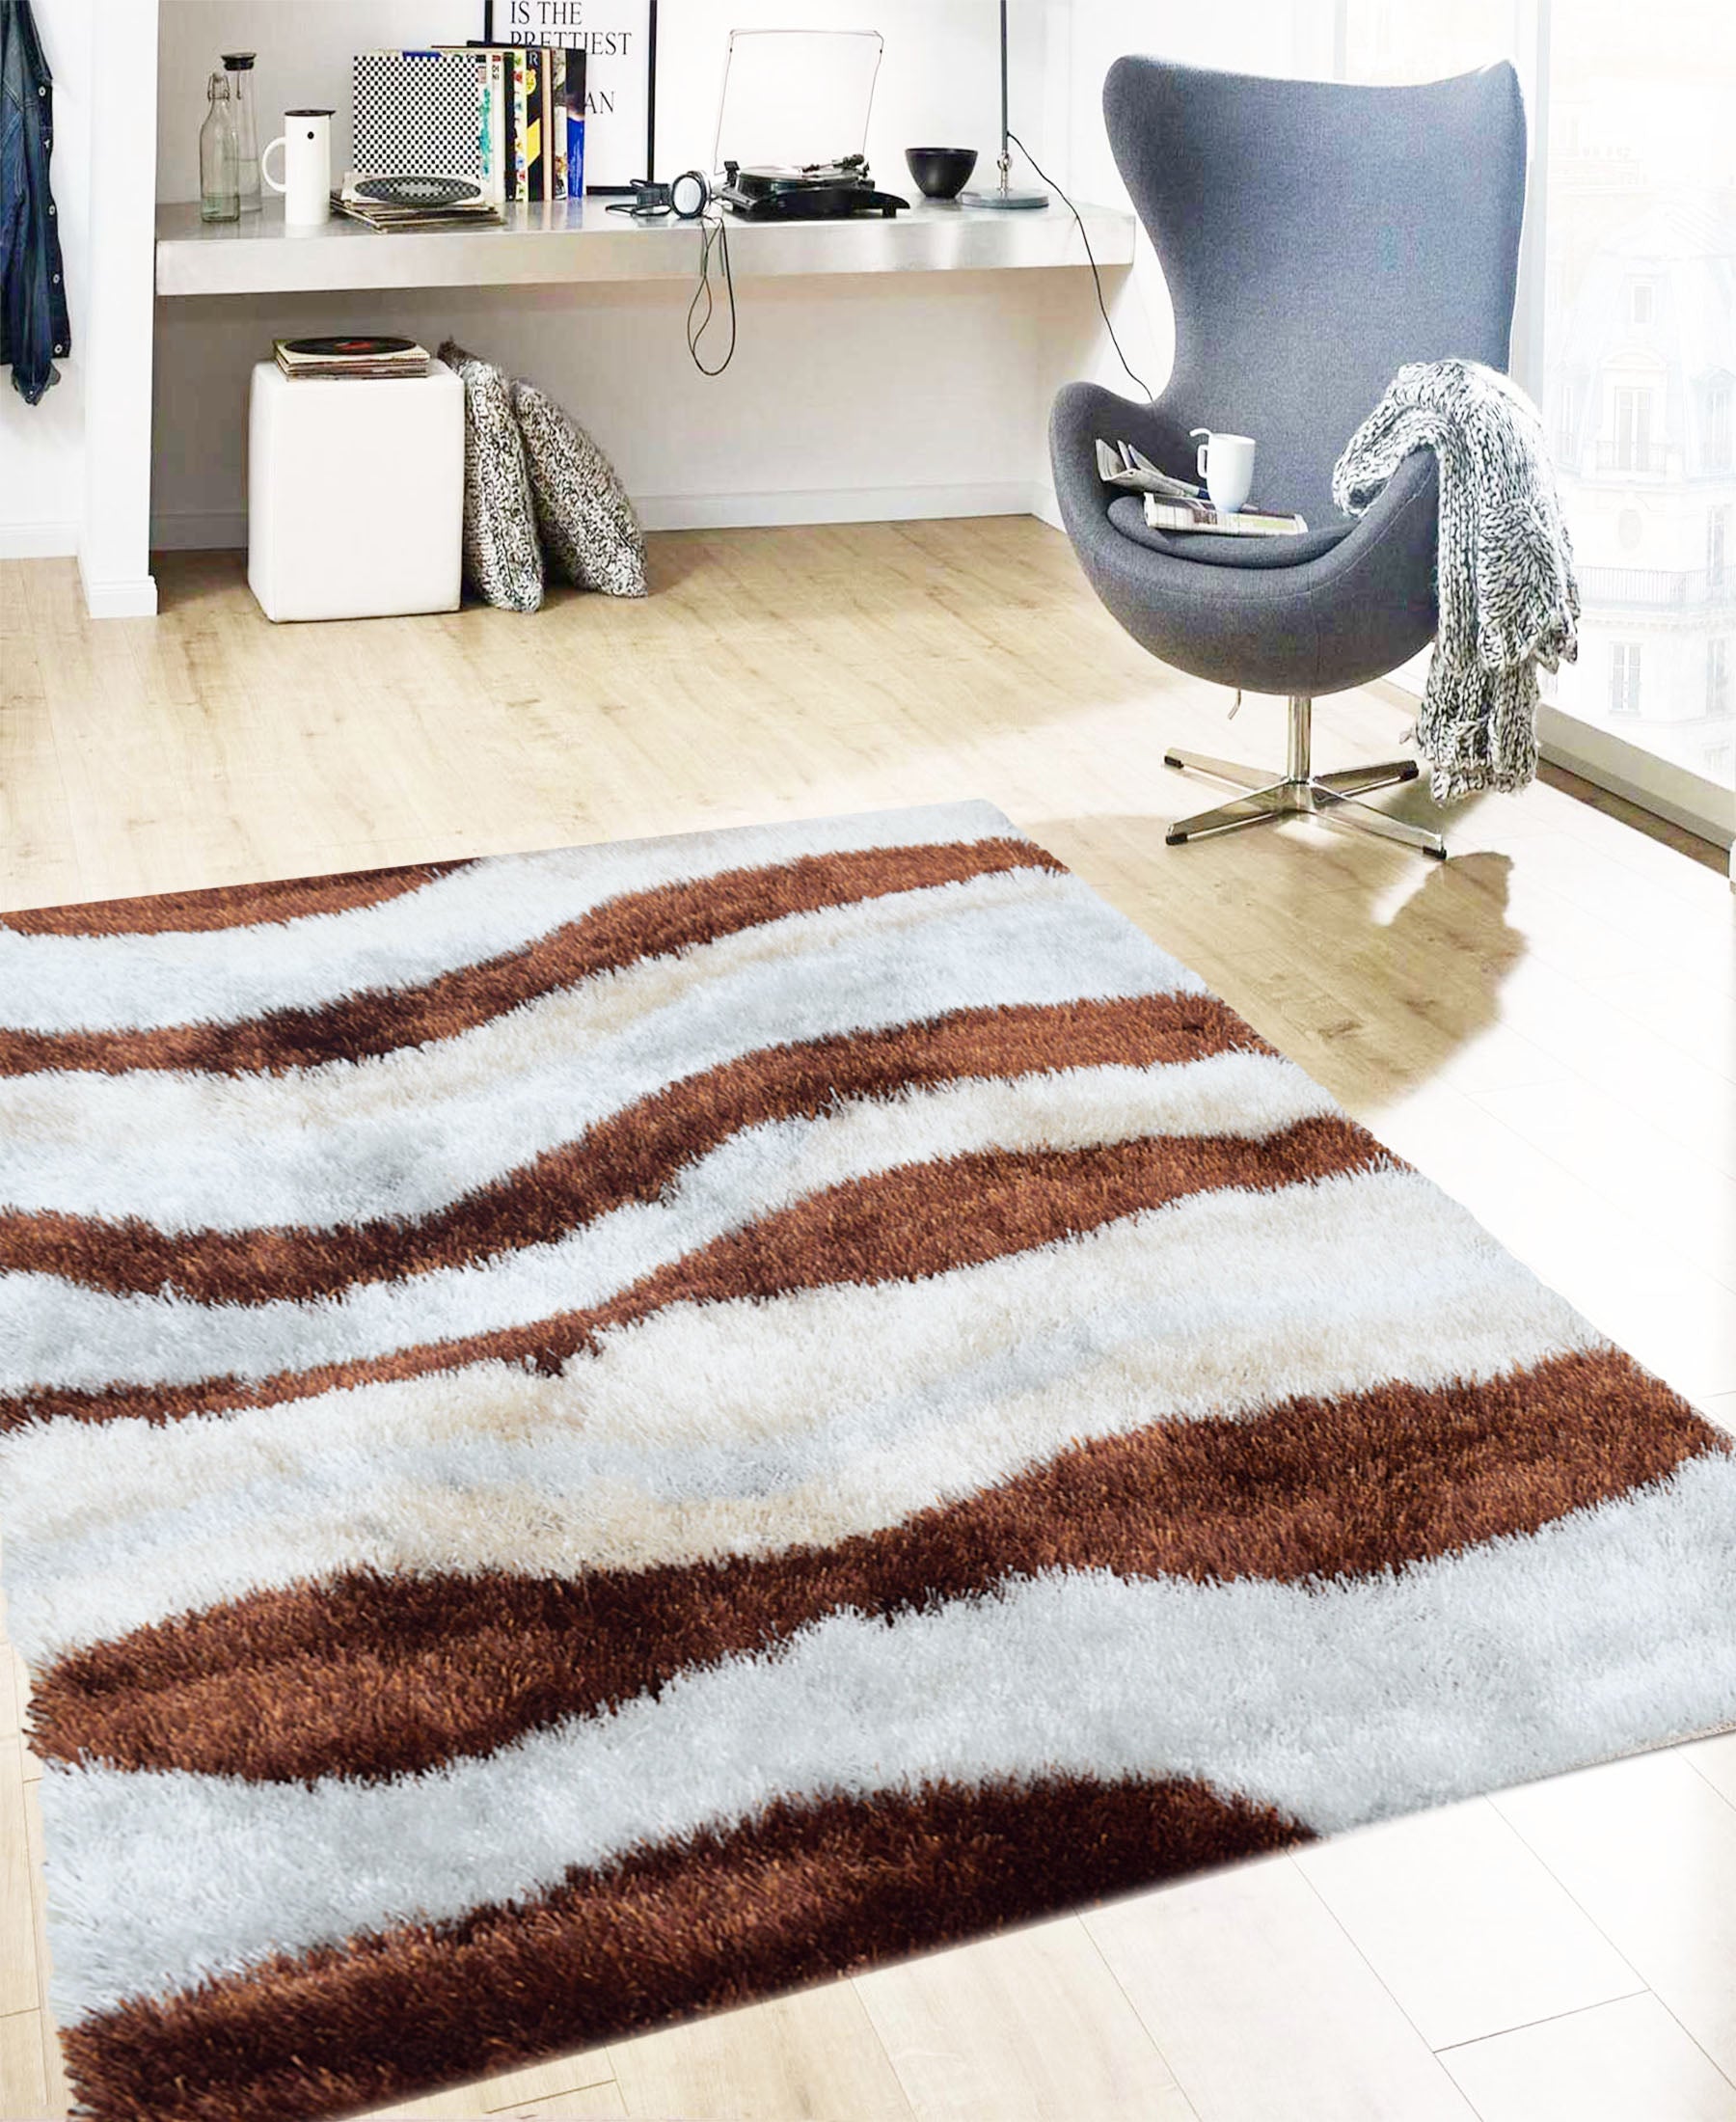 Shaggy Gritty Carpet 500mm x 800mm - Brown & Beige